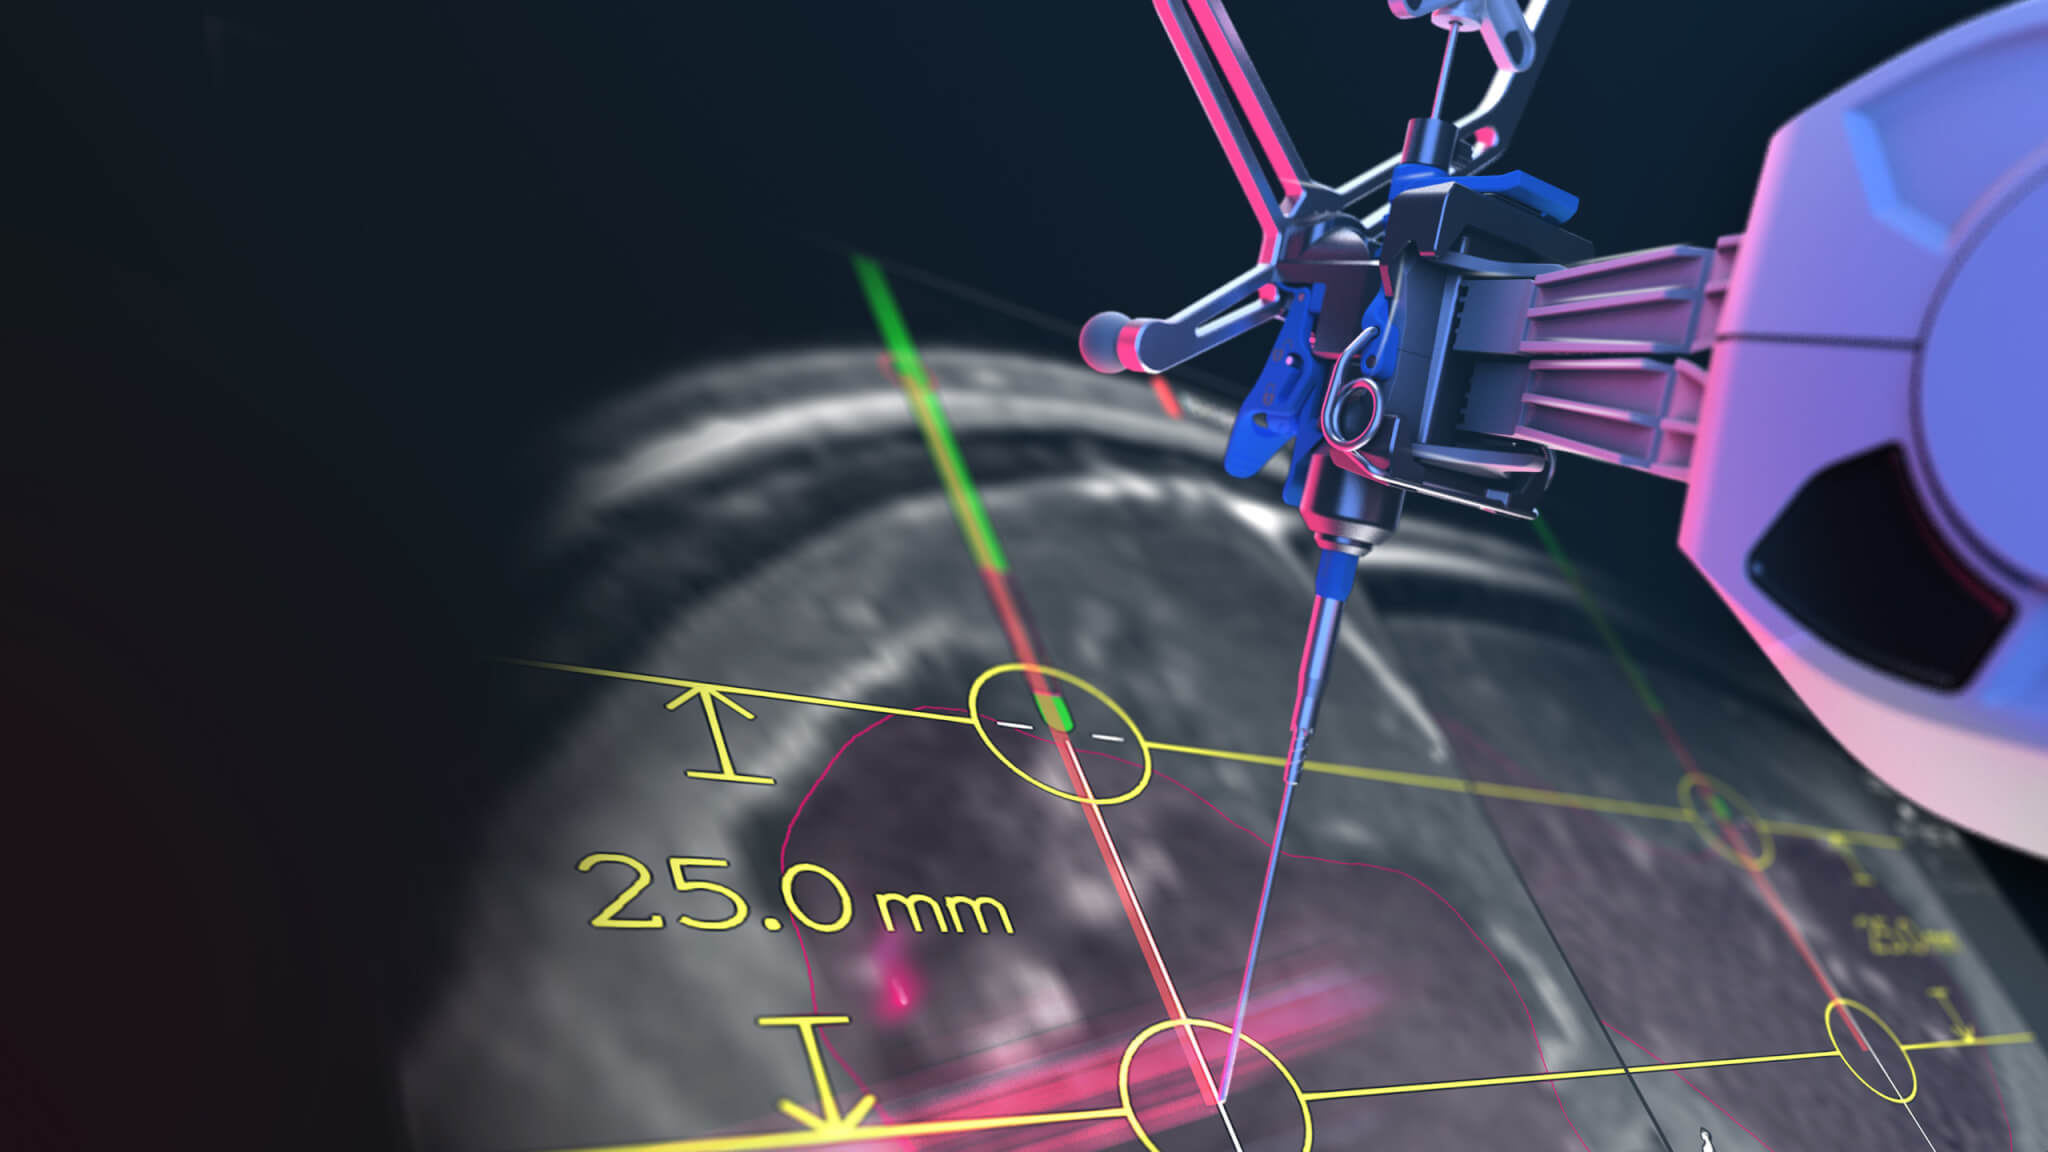 Cirq 颅脑机器人手术臂的模块指向手术导航软件屏幕上显示的画面